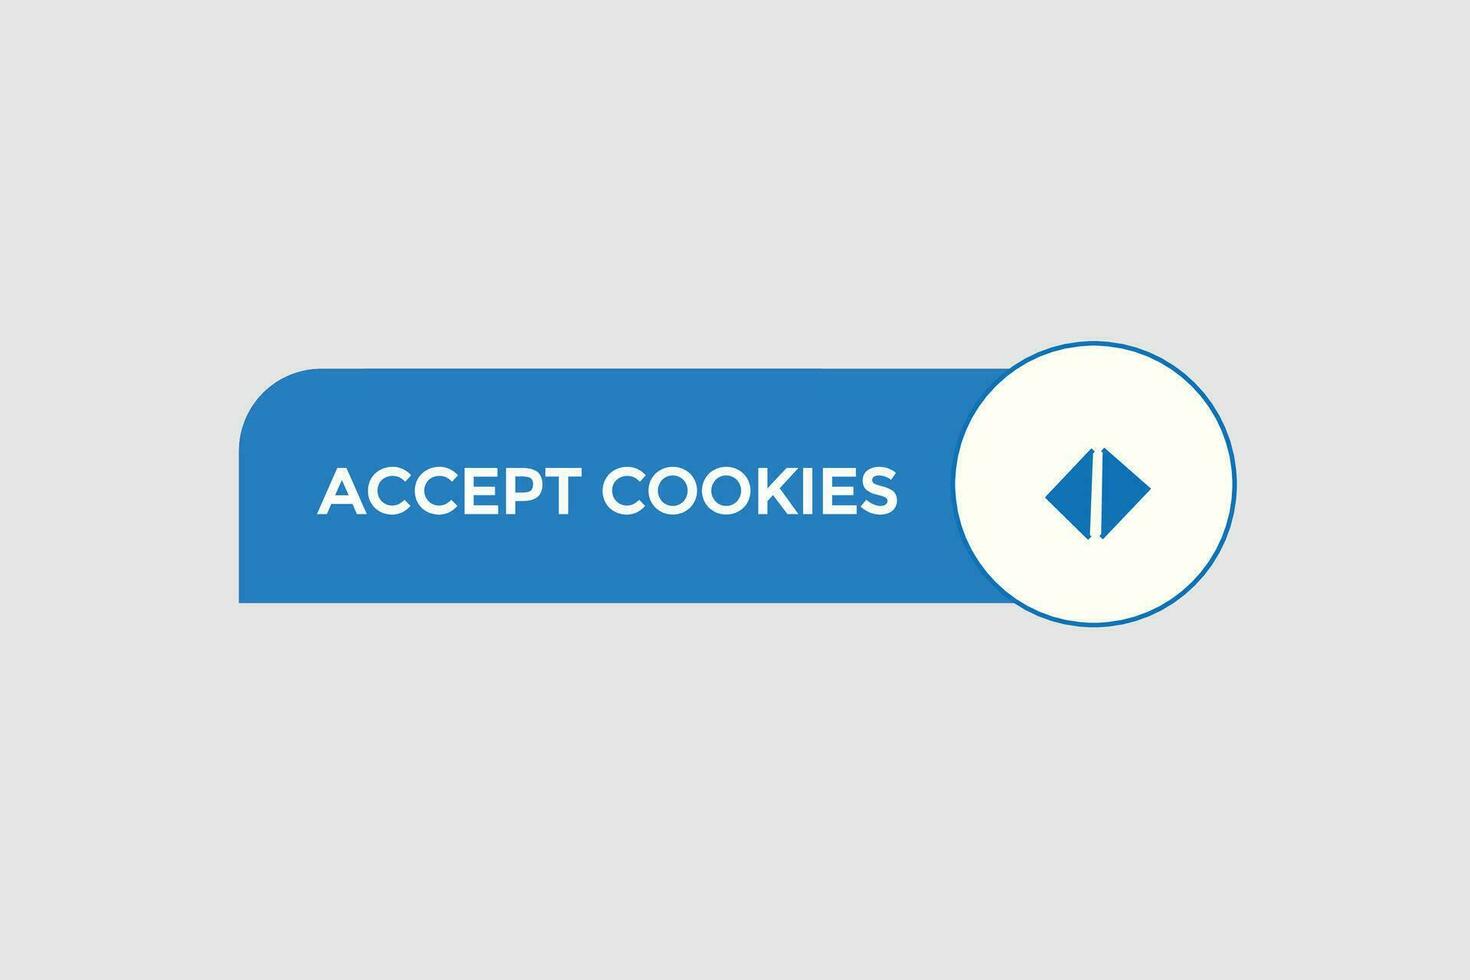 nuevo aceptar galletas moderno, sitio web, hacer clic botón, nivel, firmar, discurso, burbuja bandera, vector